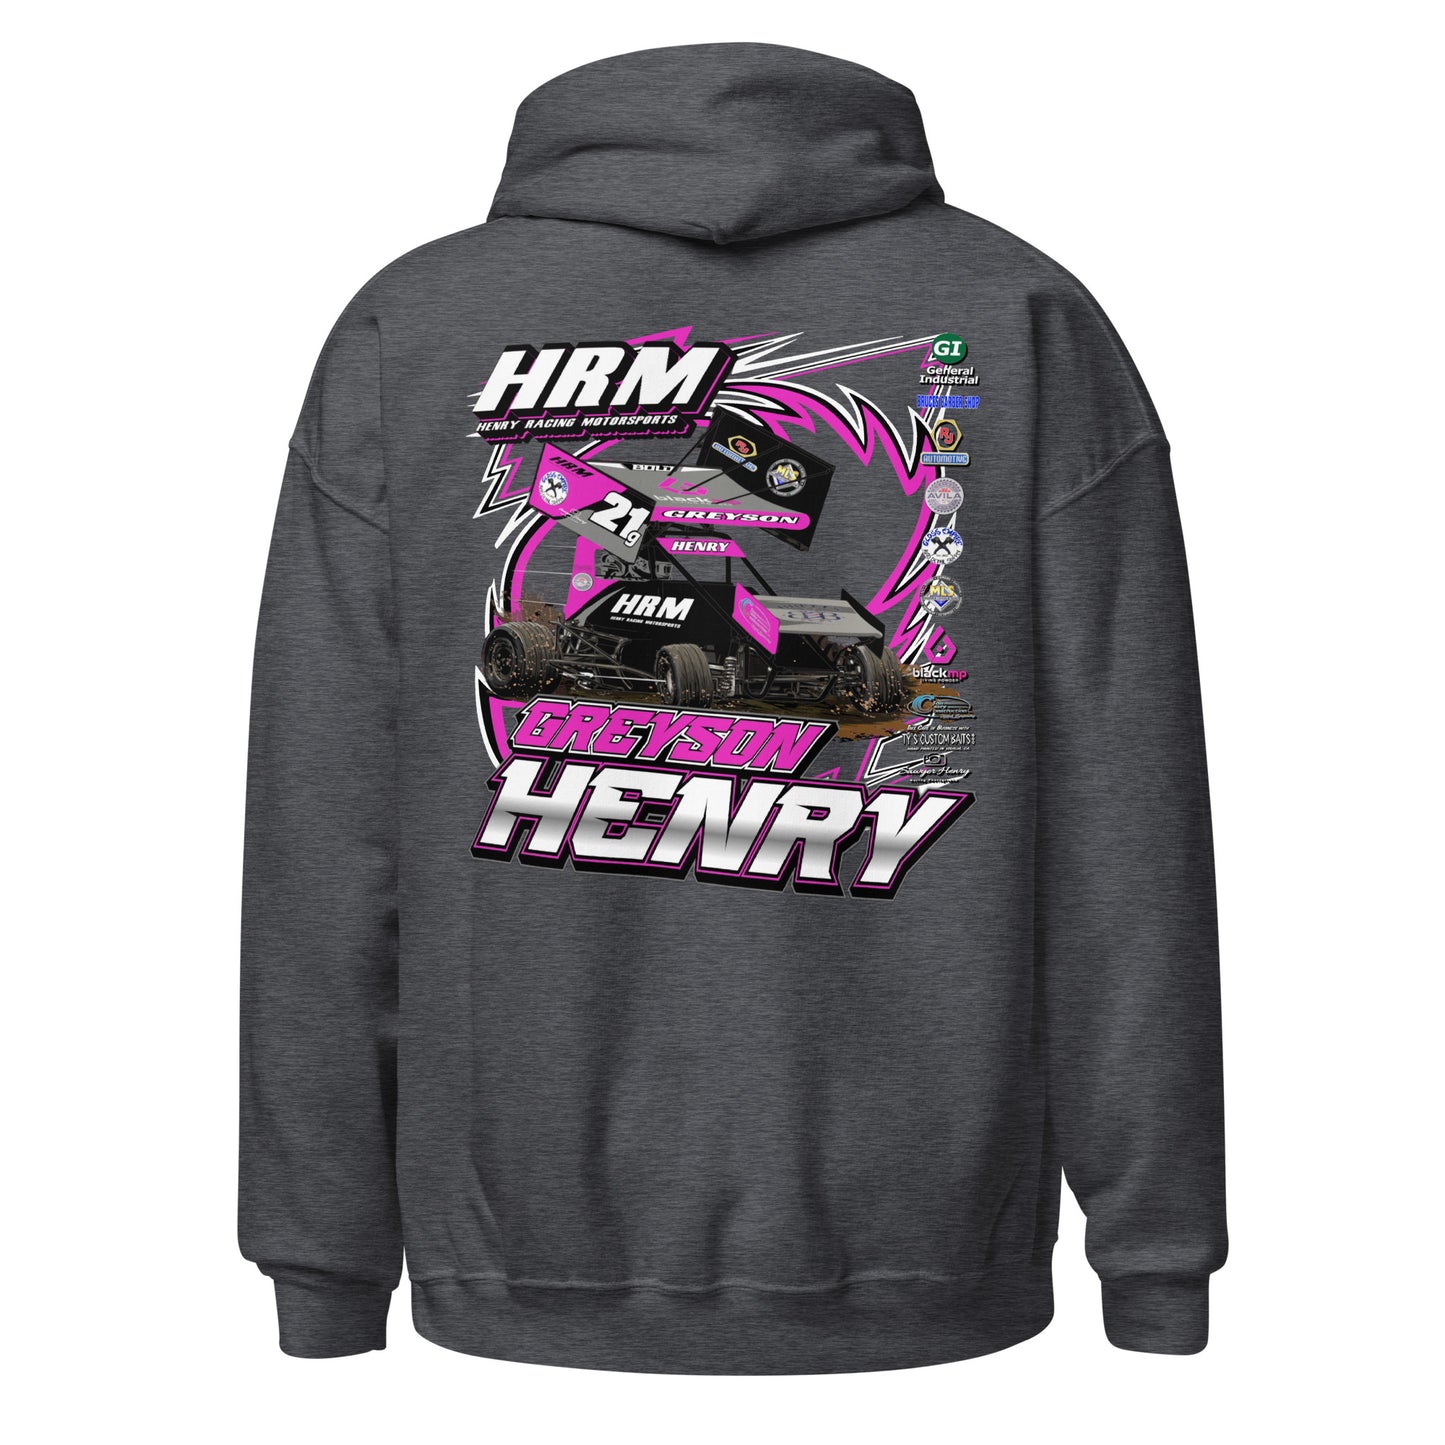 Greyson Henry Adult Hoodie Sweatshirt